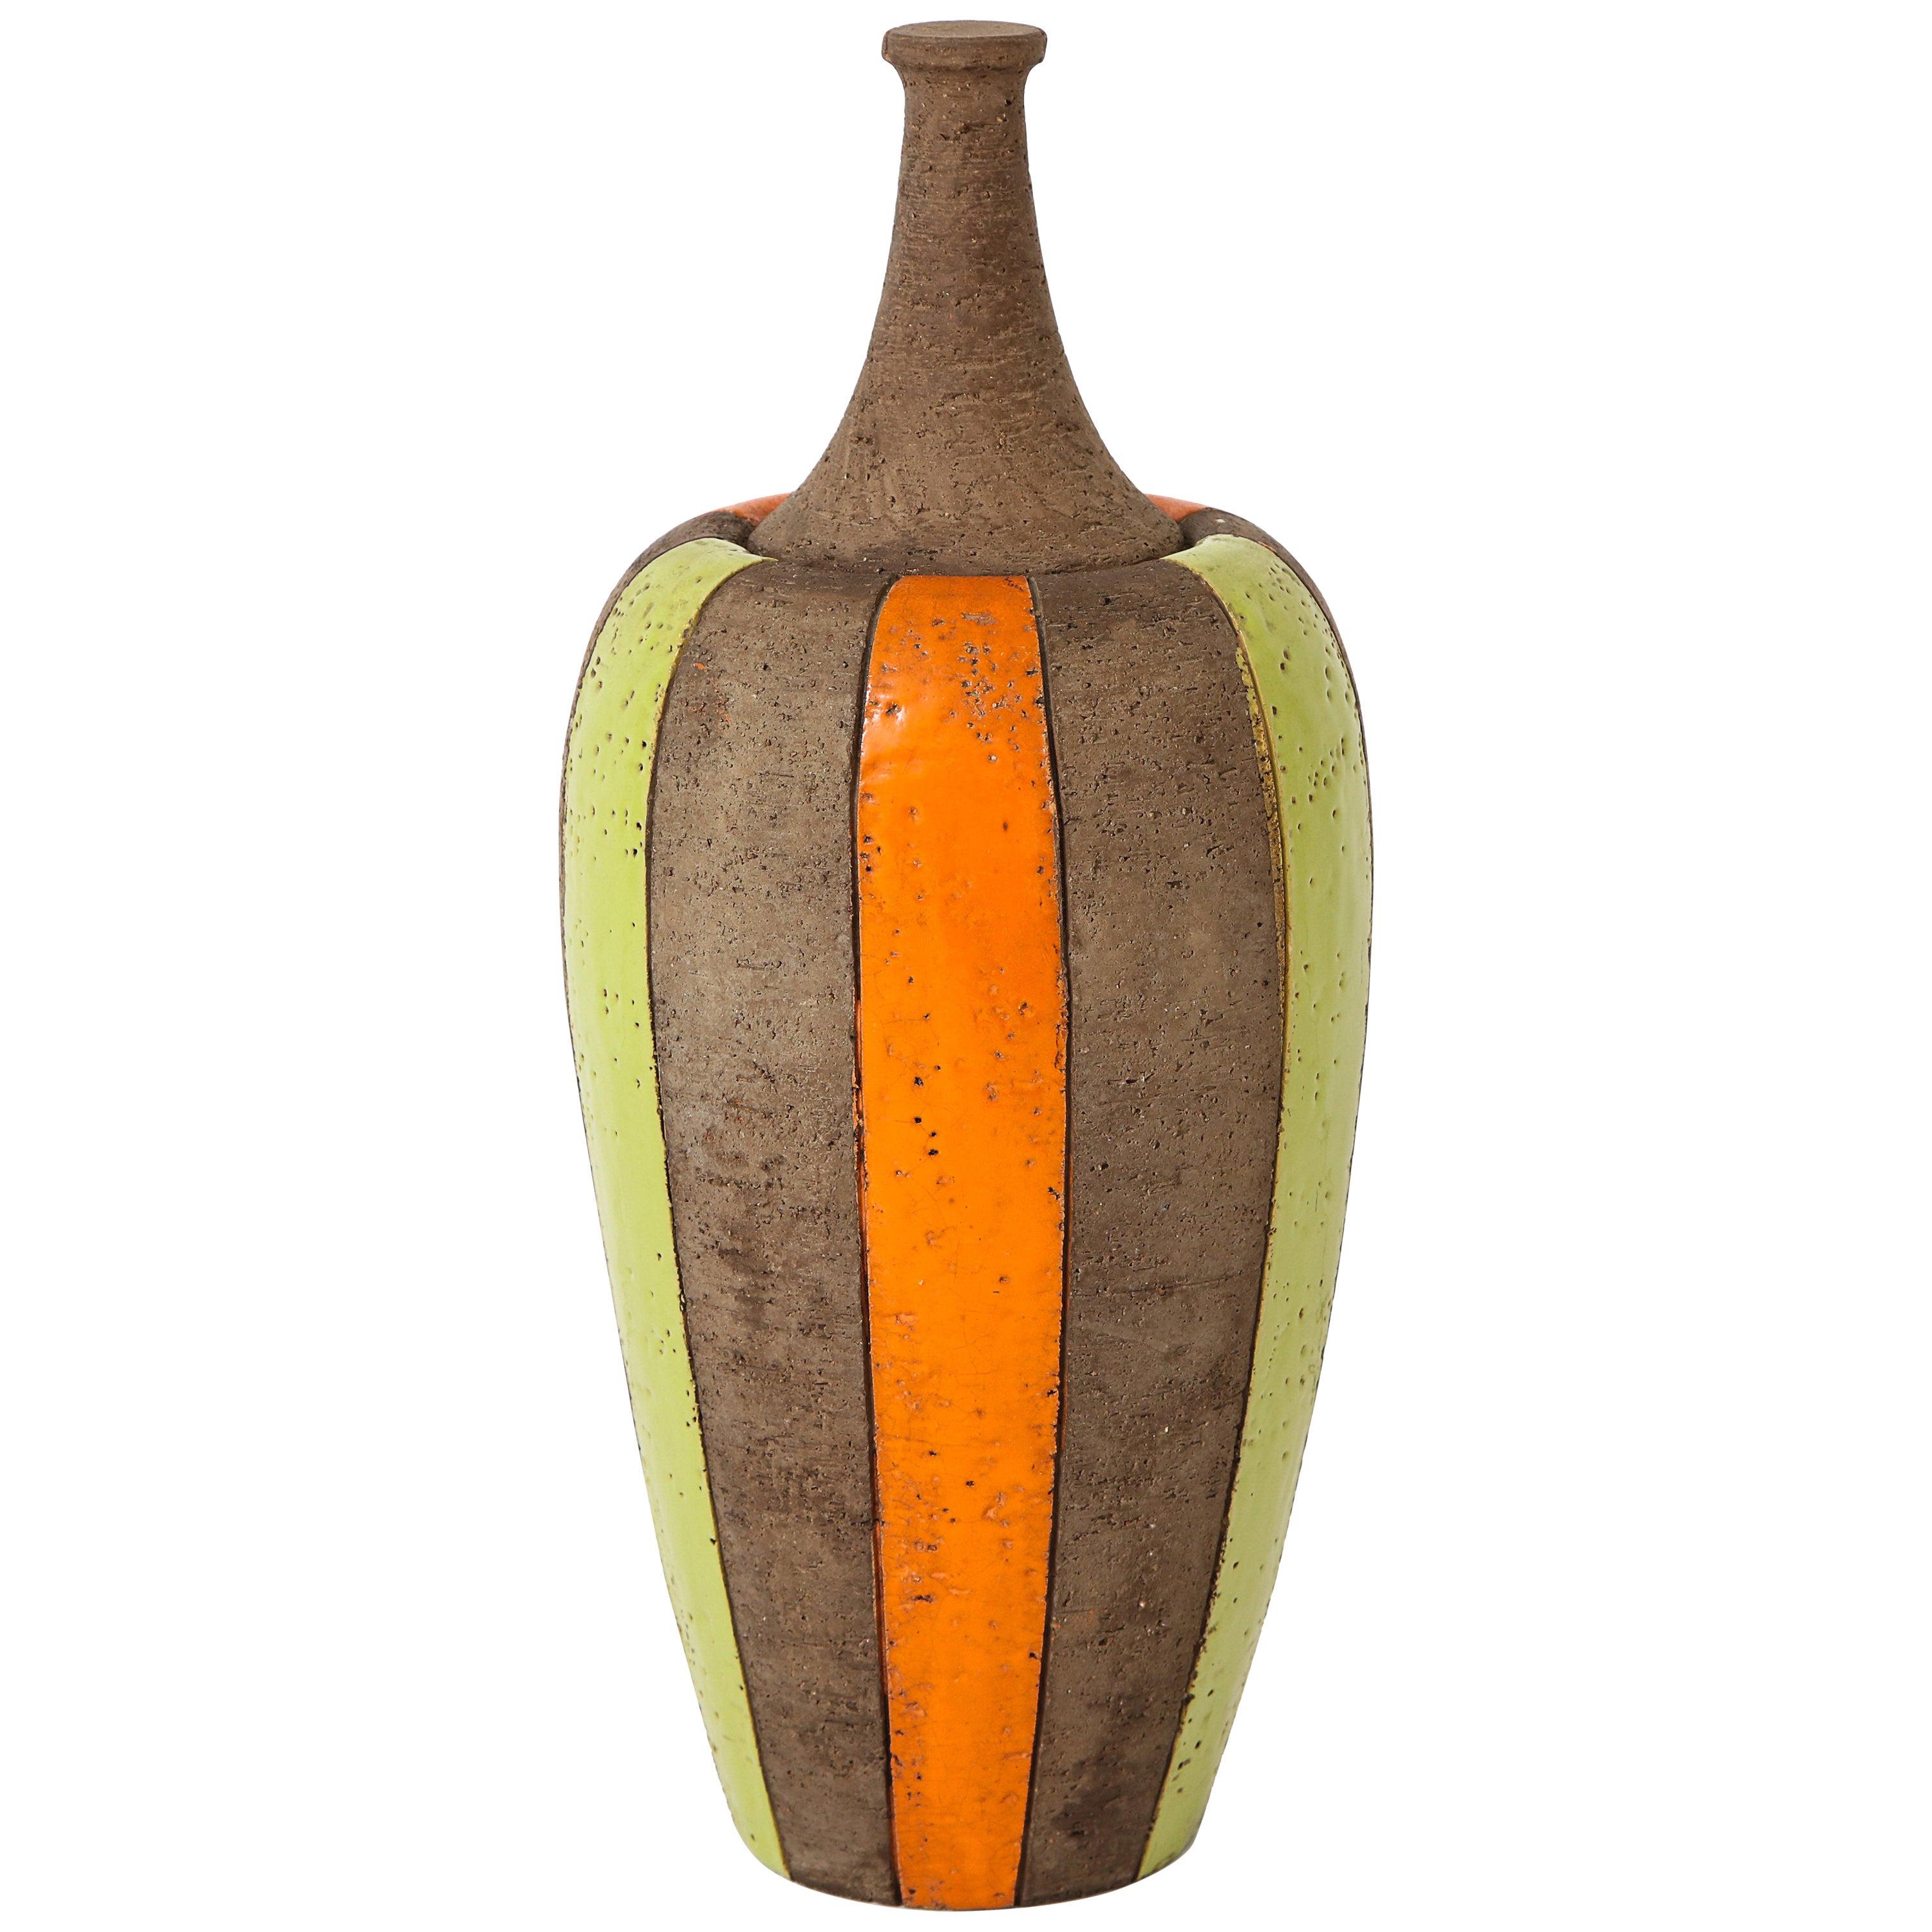 Bitossi Lidded Vase, Ceramic, Moorish Stripes, Chartreuse and Orange, Signed